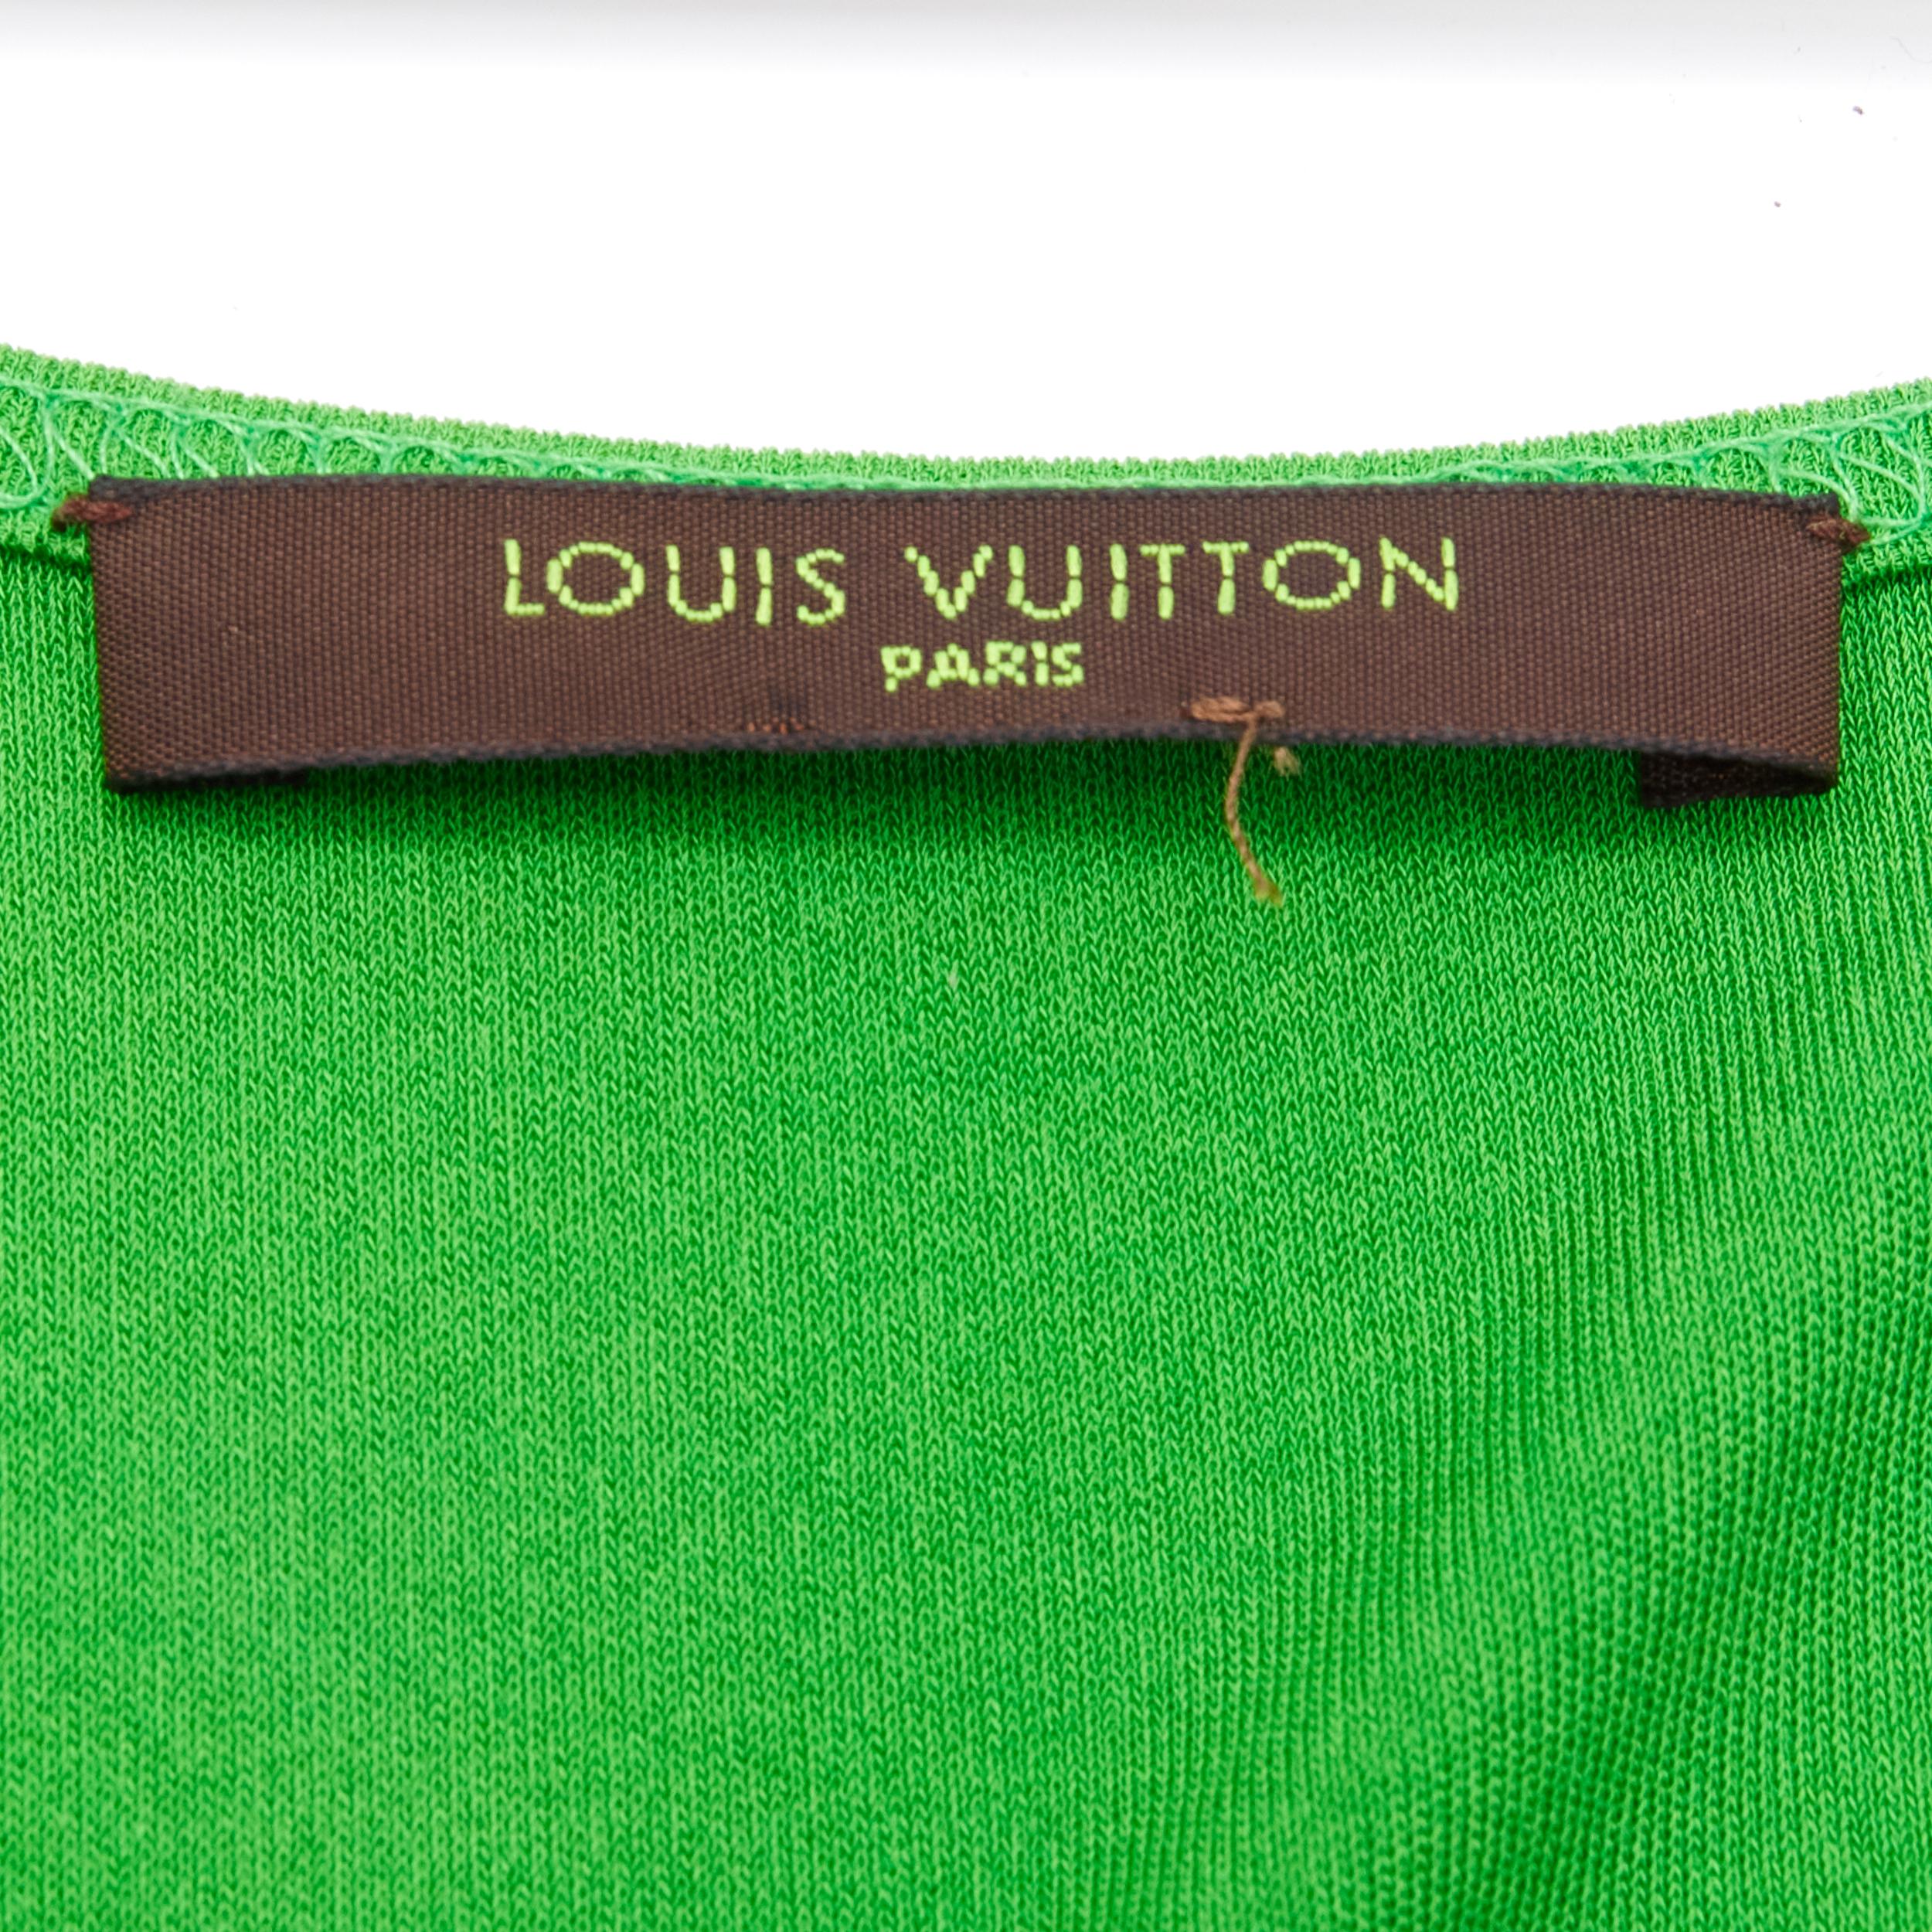 LOUIS VUITTON Stephen Sprouse Neon pink Graffiti Pop Rose green mini dress S For Sale 2